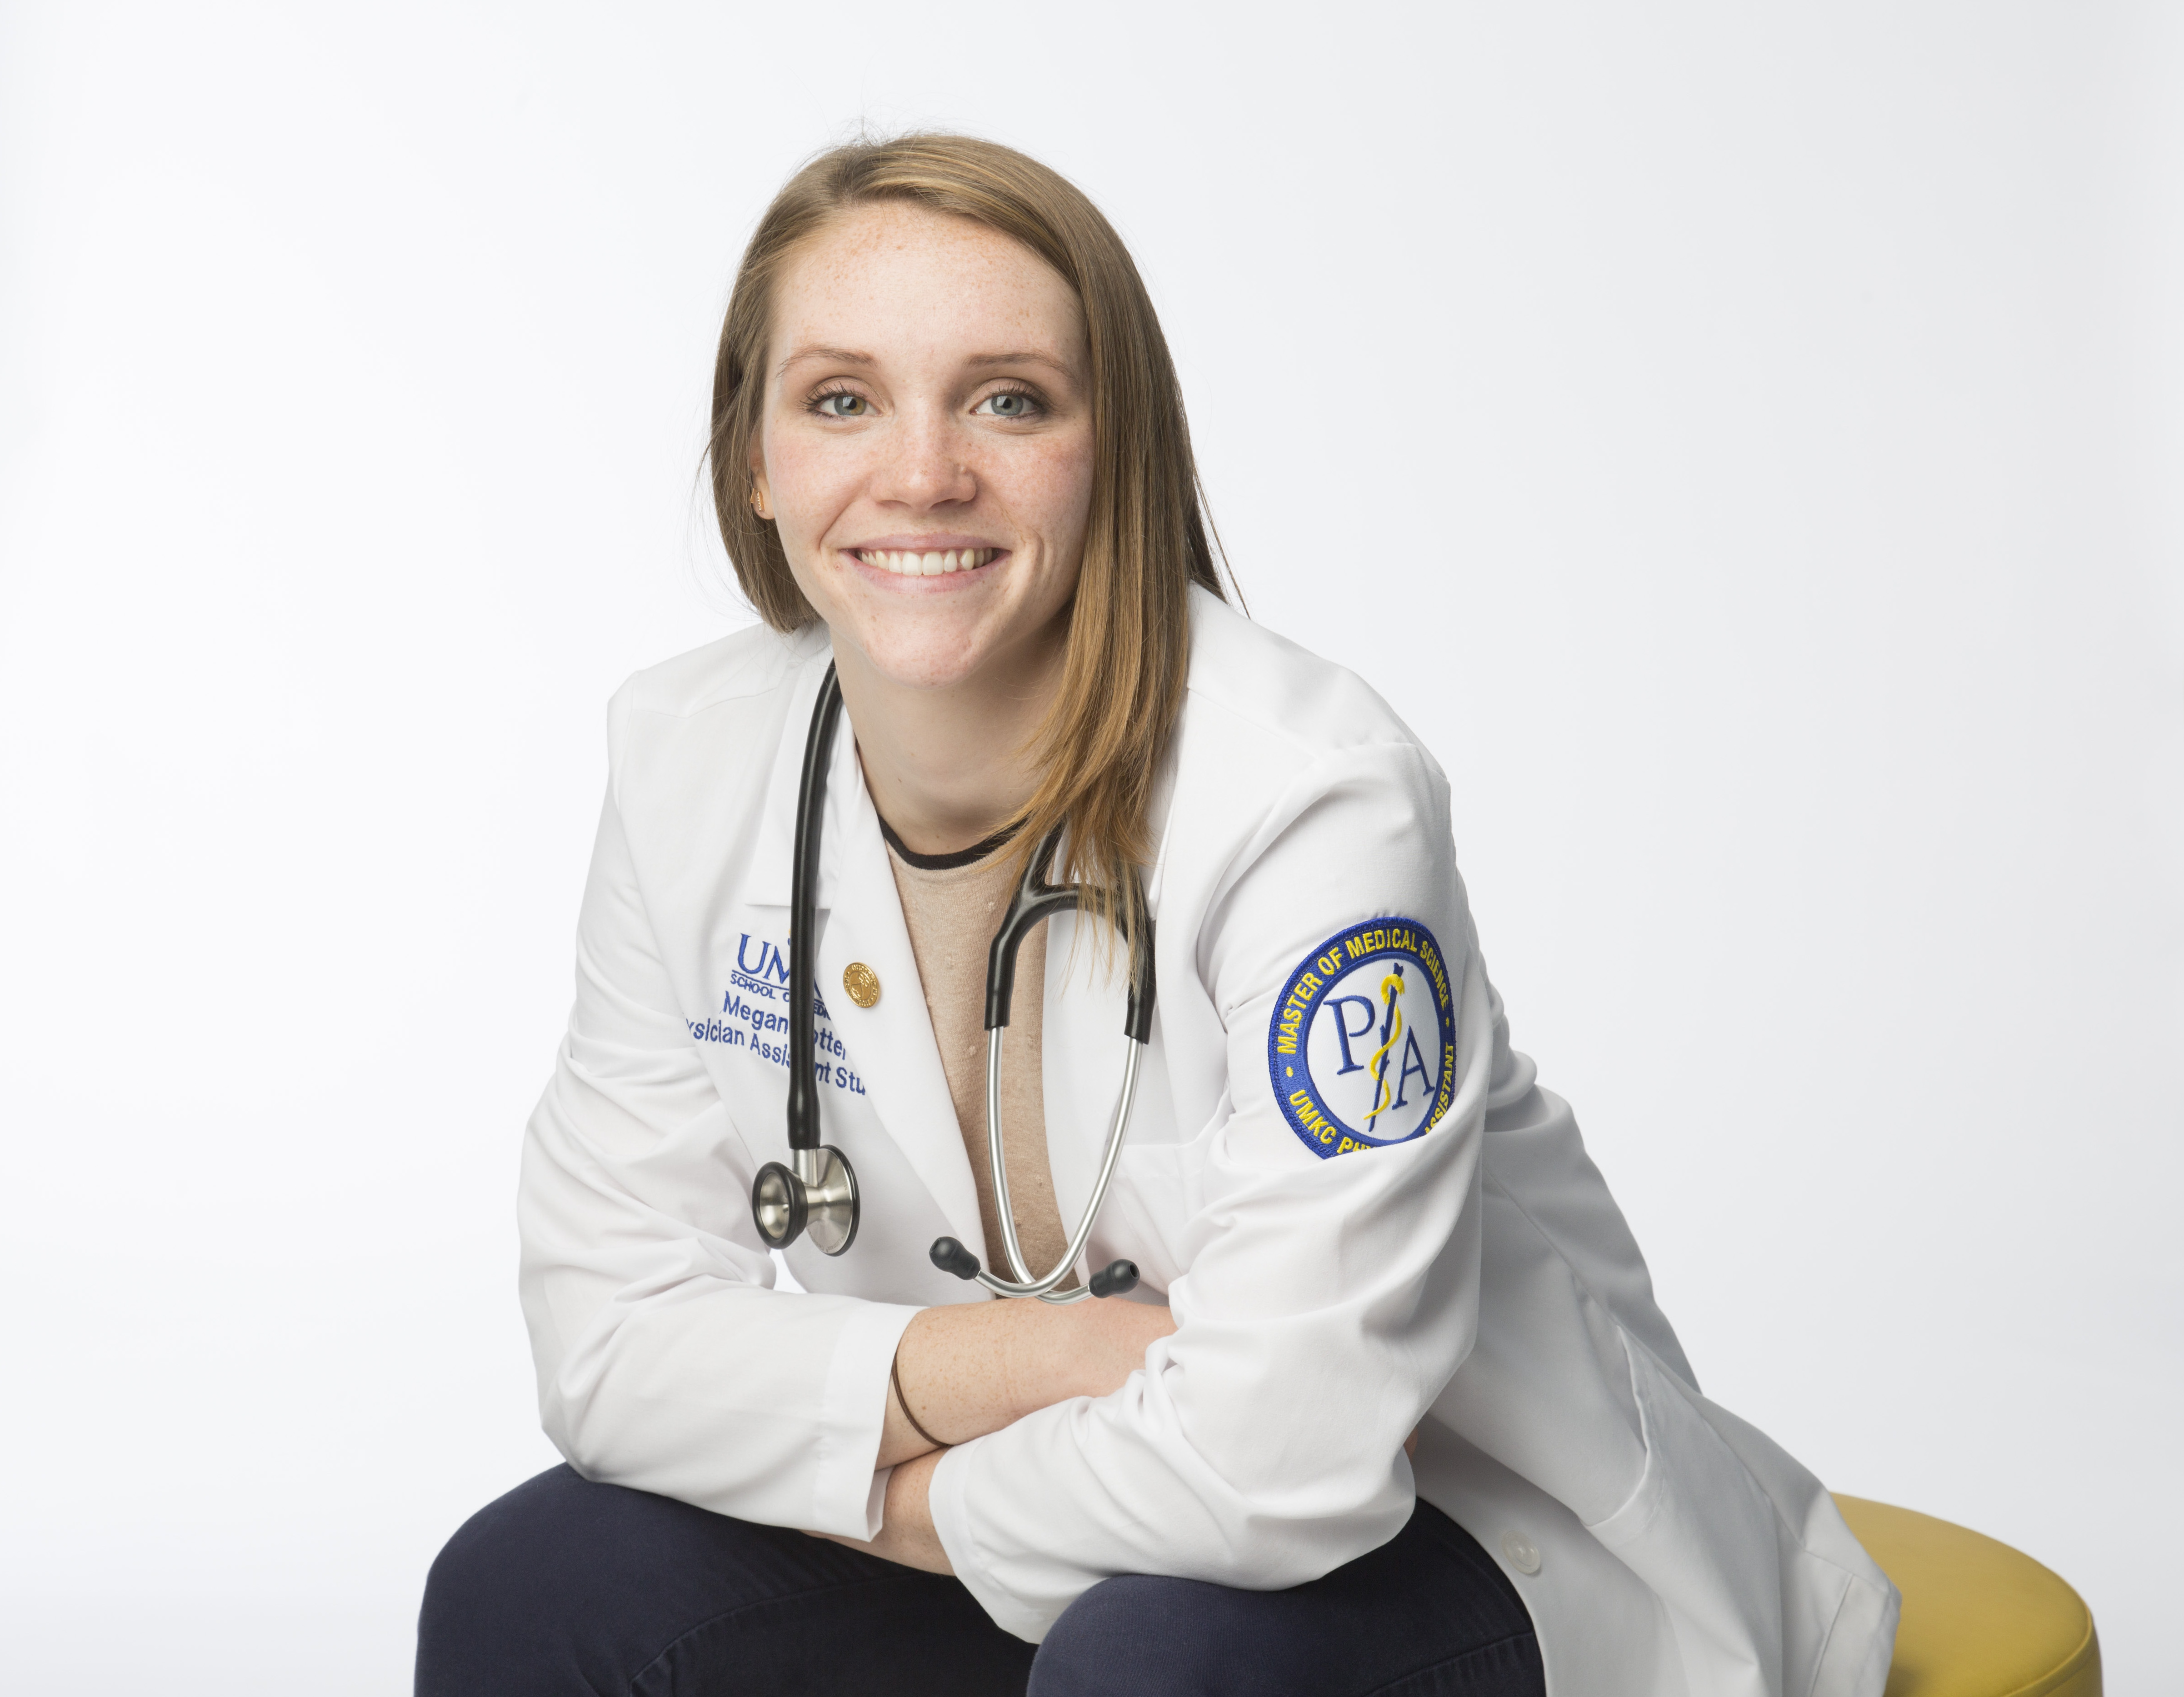 UMKC medical student Megan Hottel seated portrait